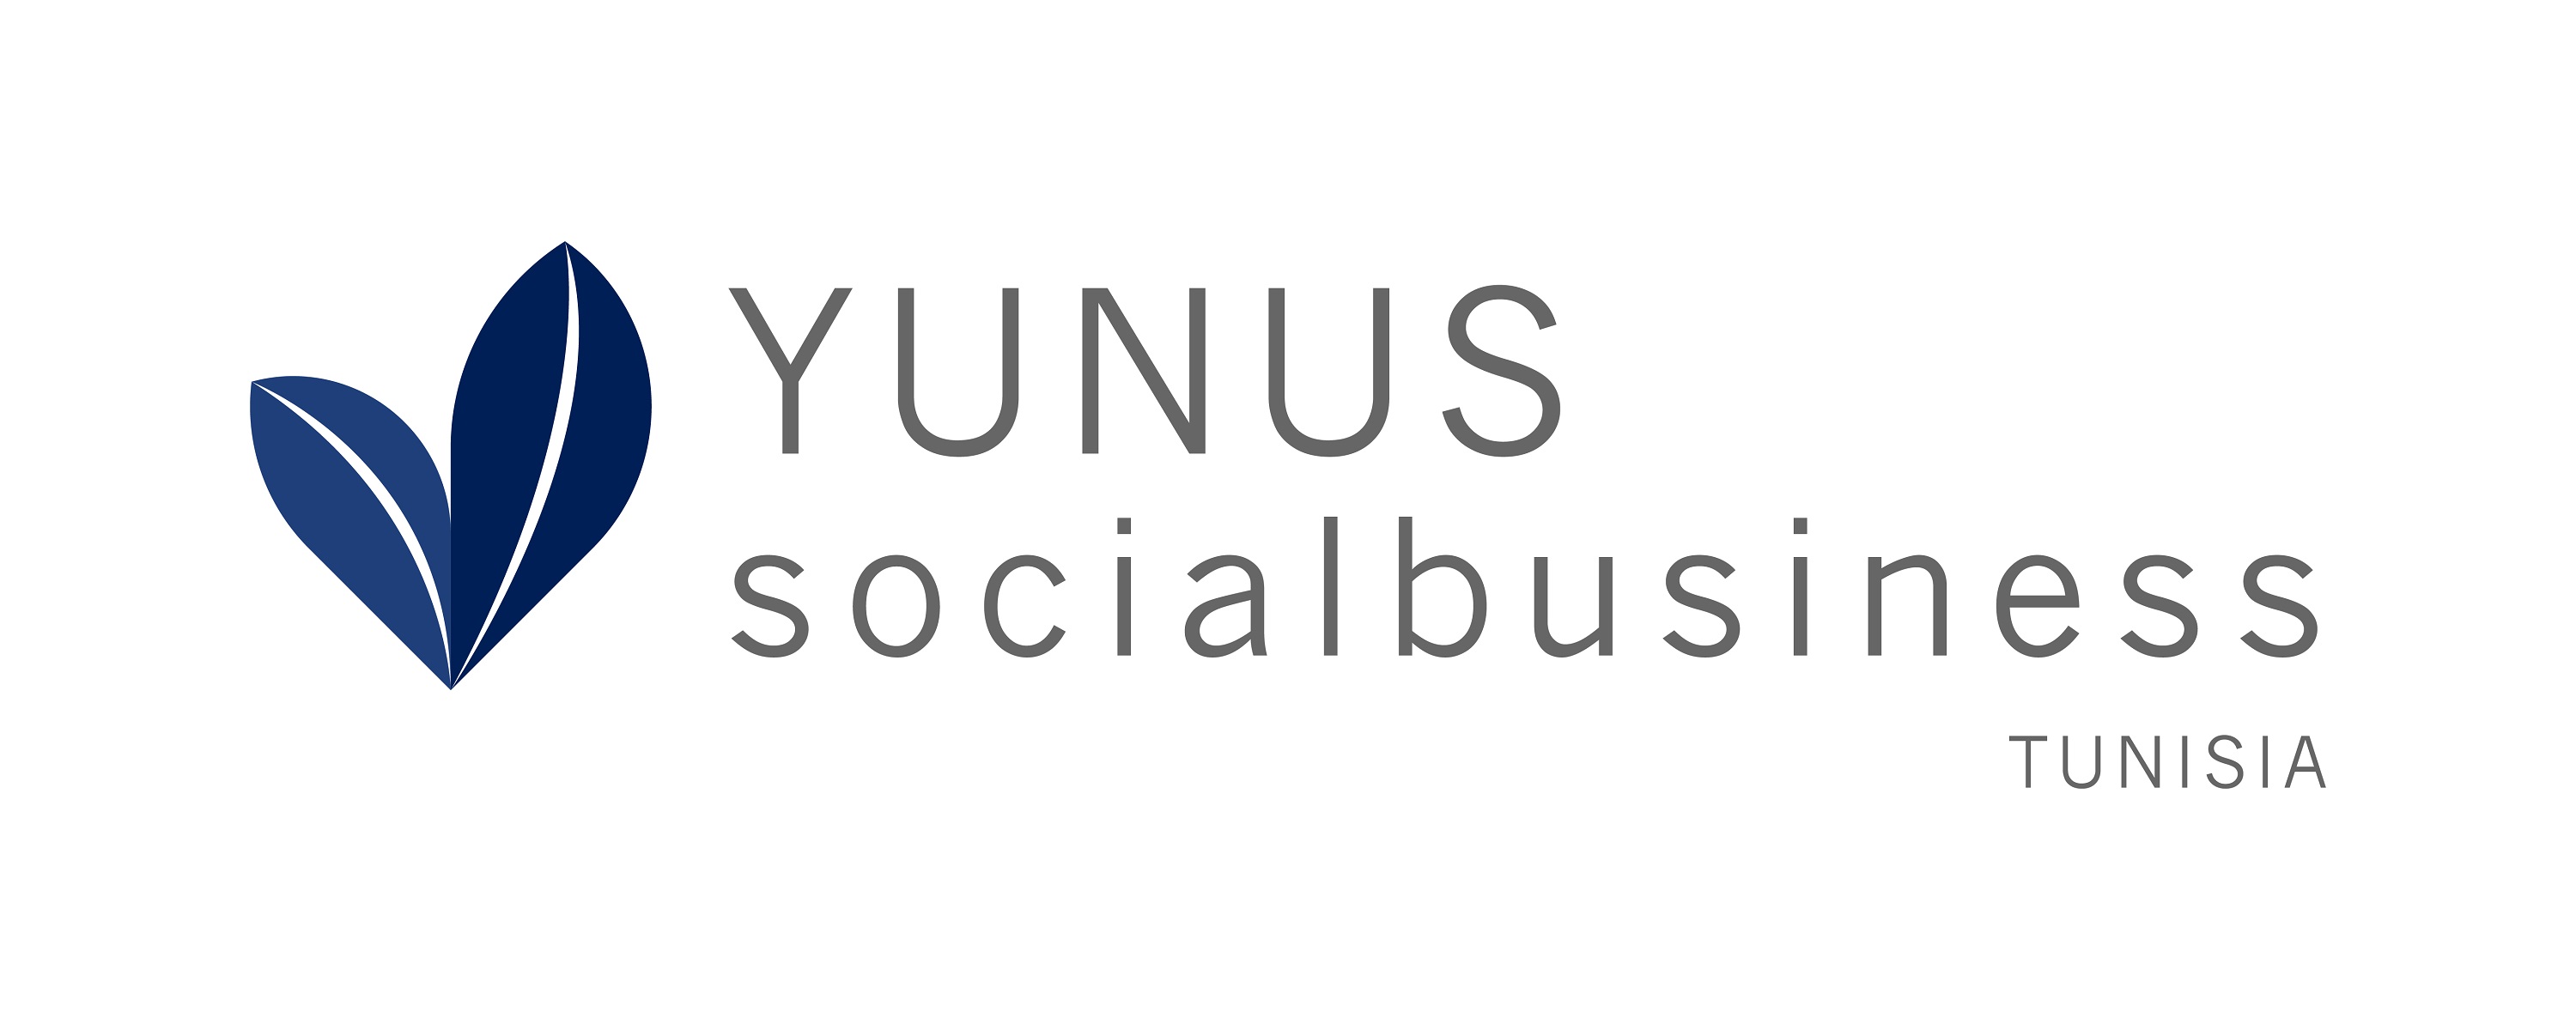 Yunus Social Business Tunisia